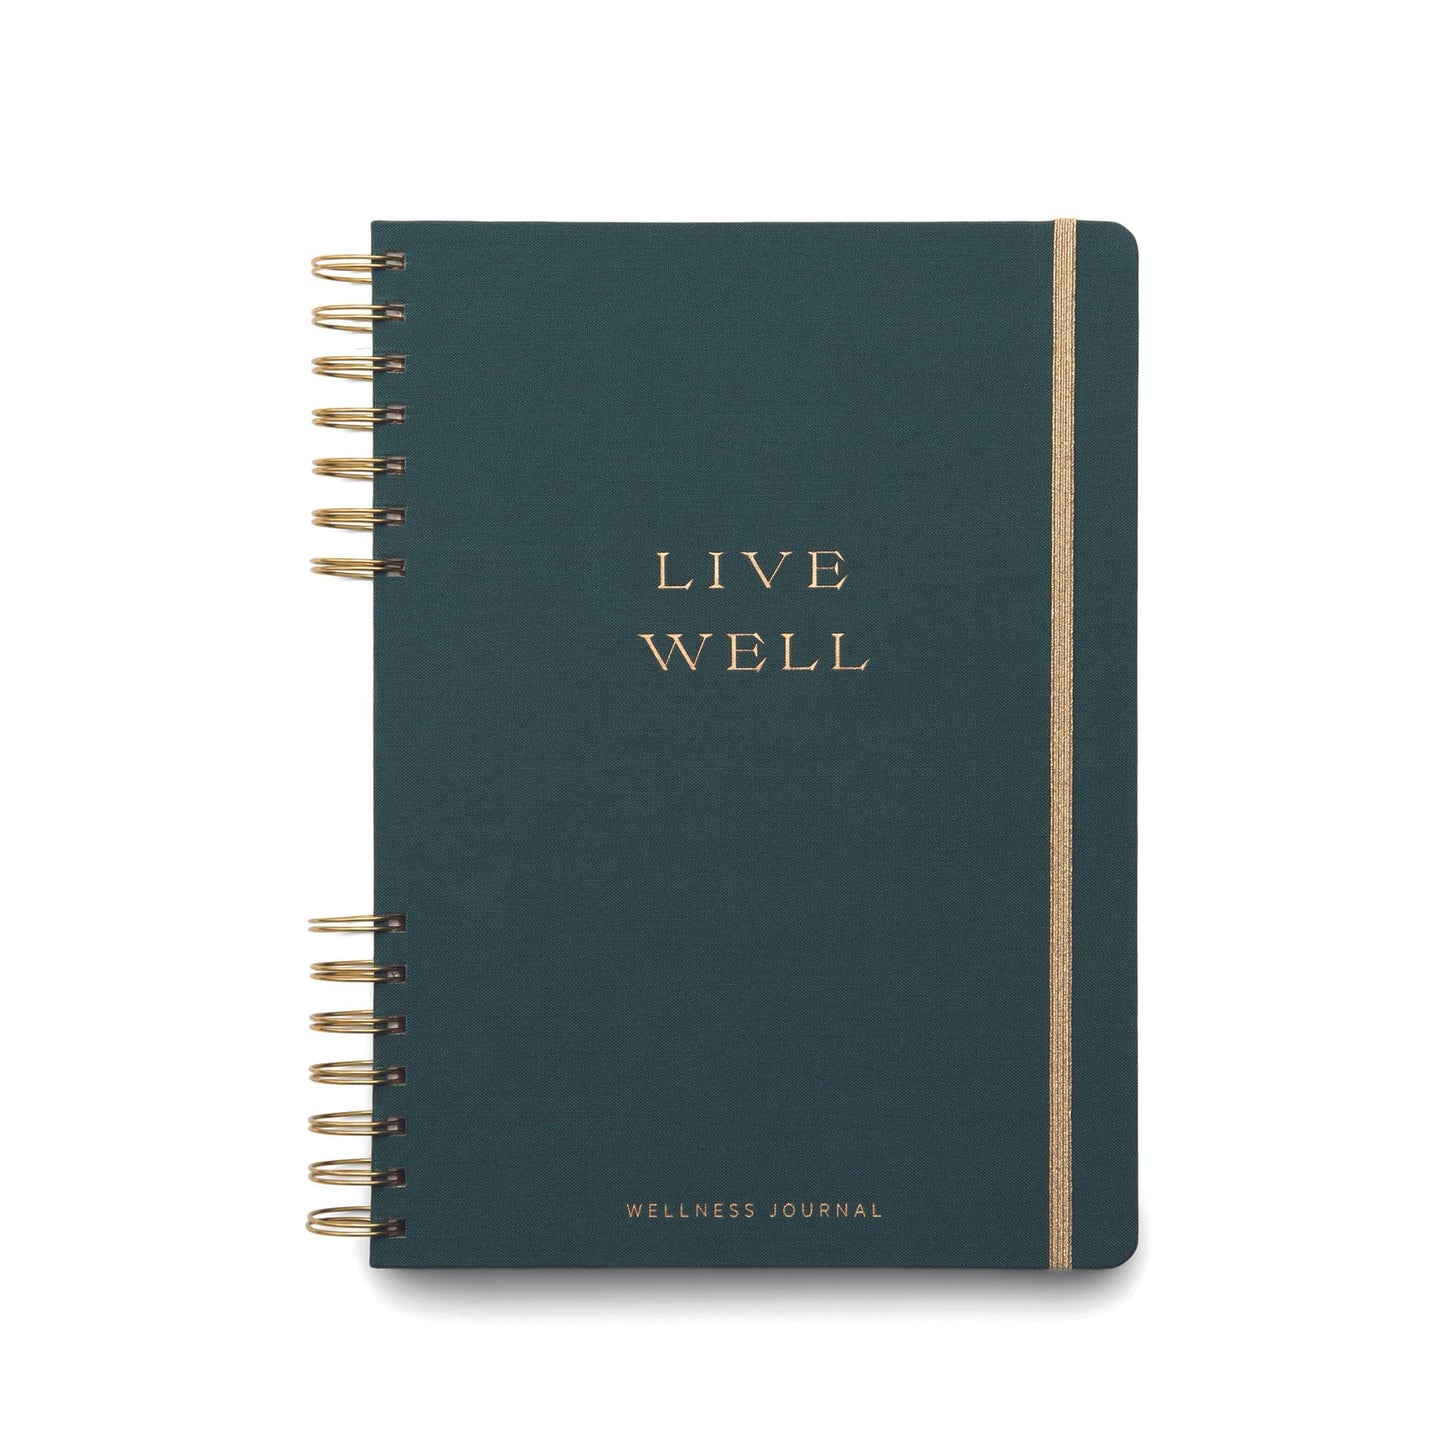 Guided Wellness Journal - "Live Well"